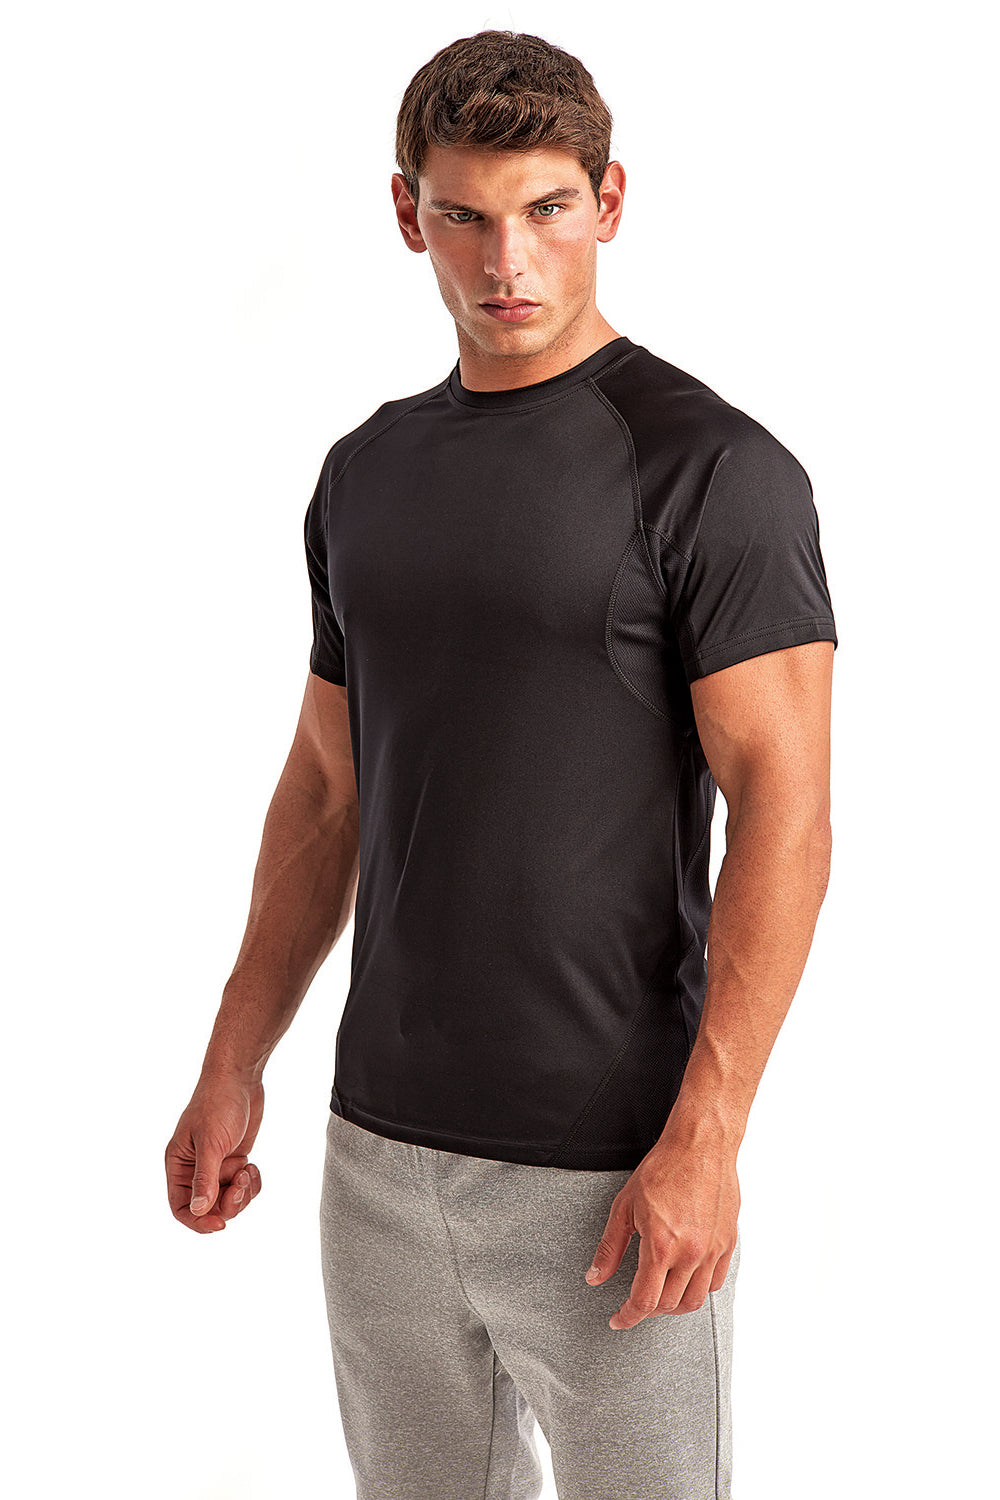 TriDri TD011 Mens Panelled Tech Moisture Wicking Short Sleeve Crewneck T-Shirt Black 3Q